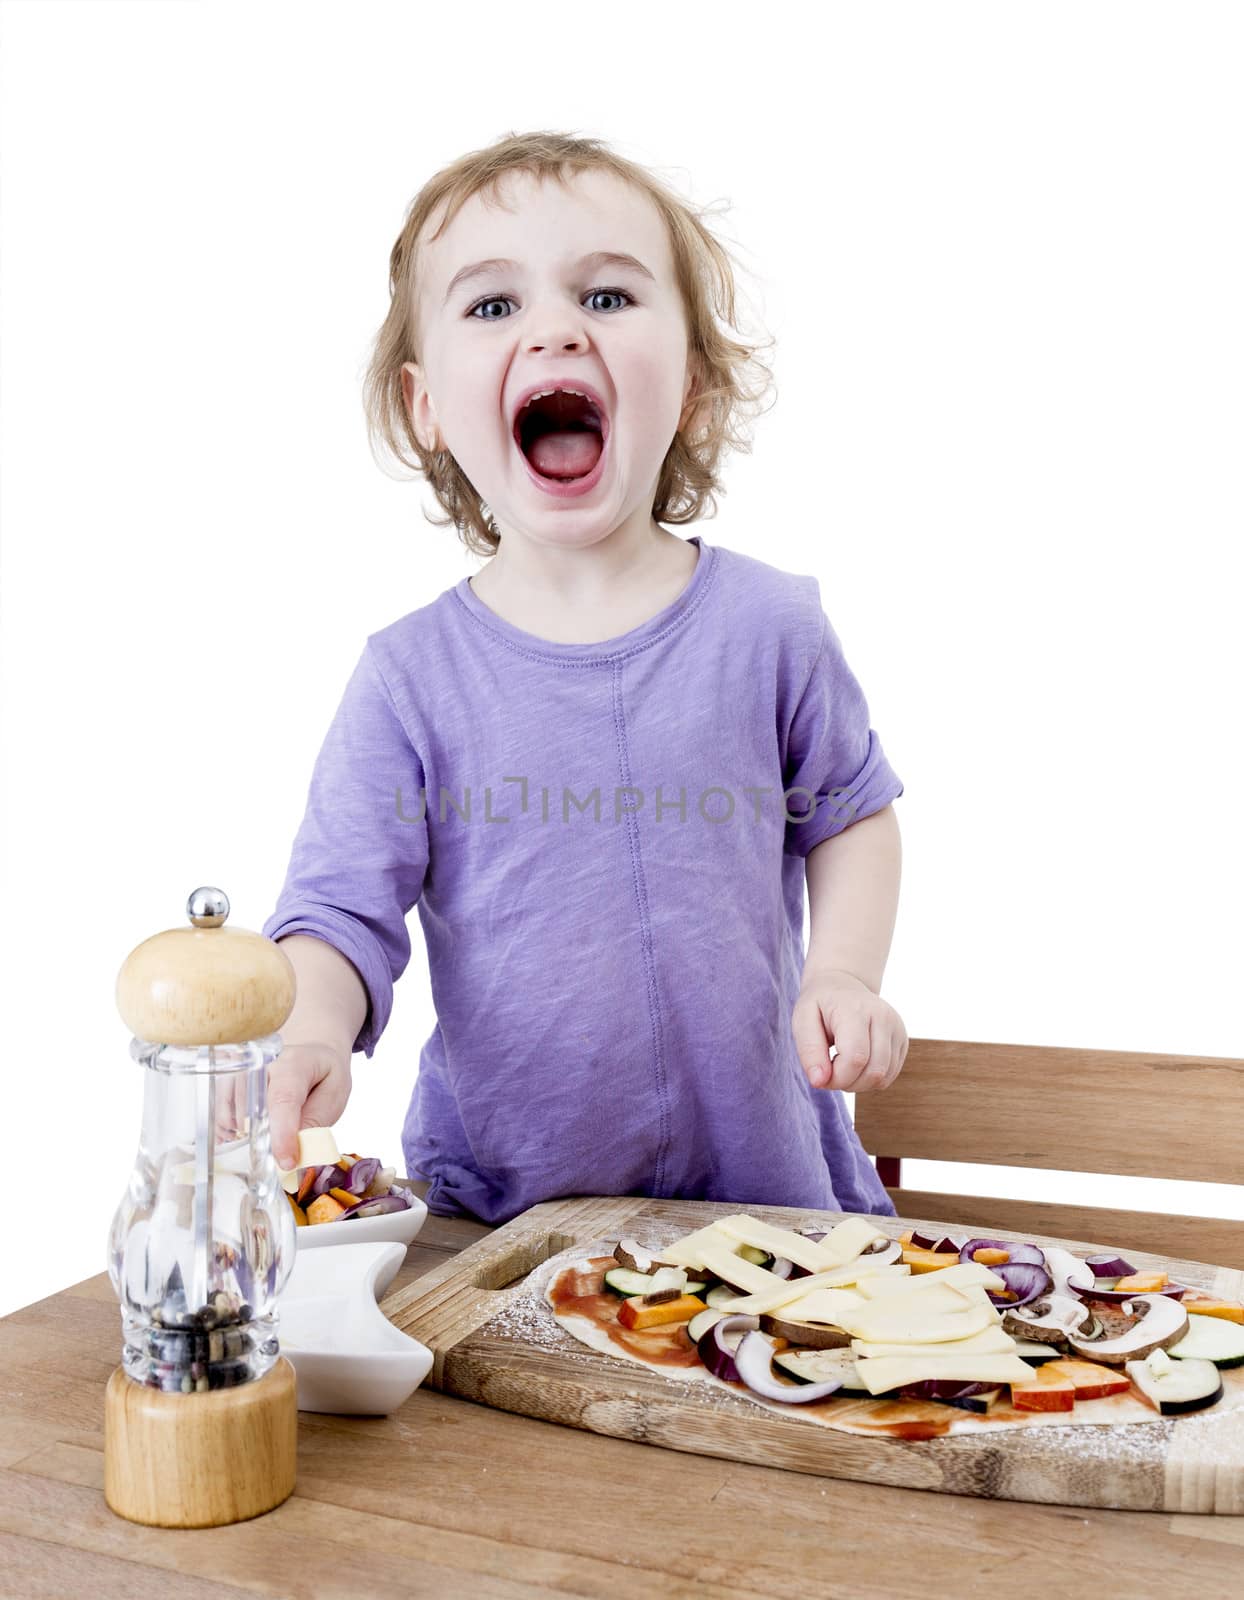 screaming child making fresh pizza. studio shot isolated in white background